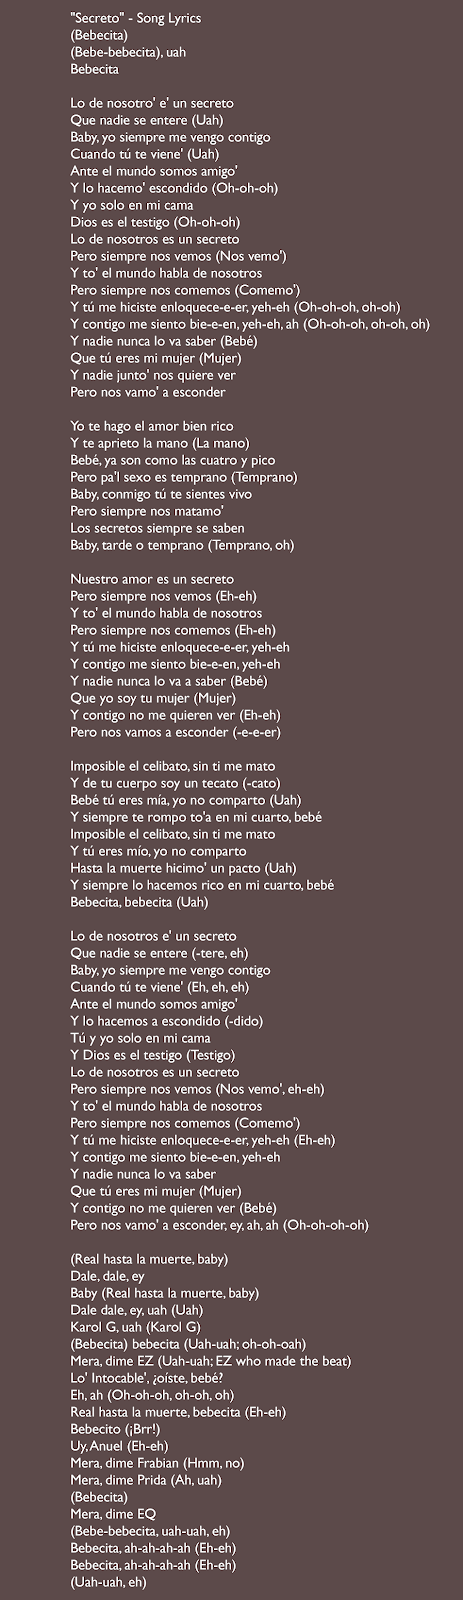 Anuel AA, Karol G - Secreto Song Lyrics / Letra